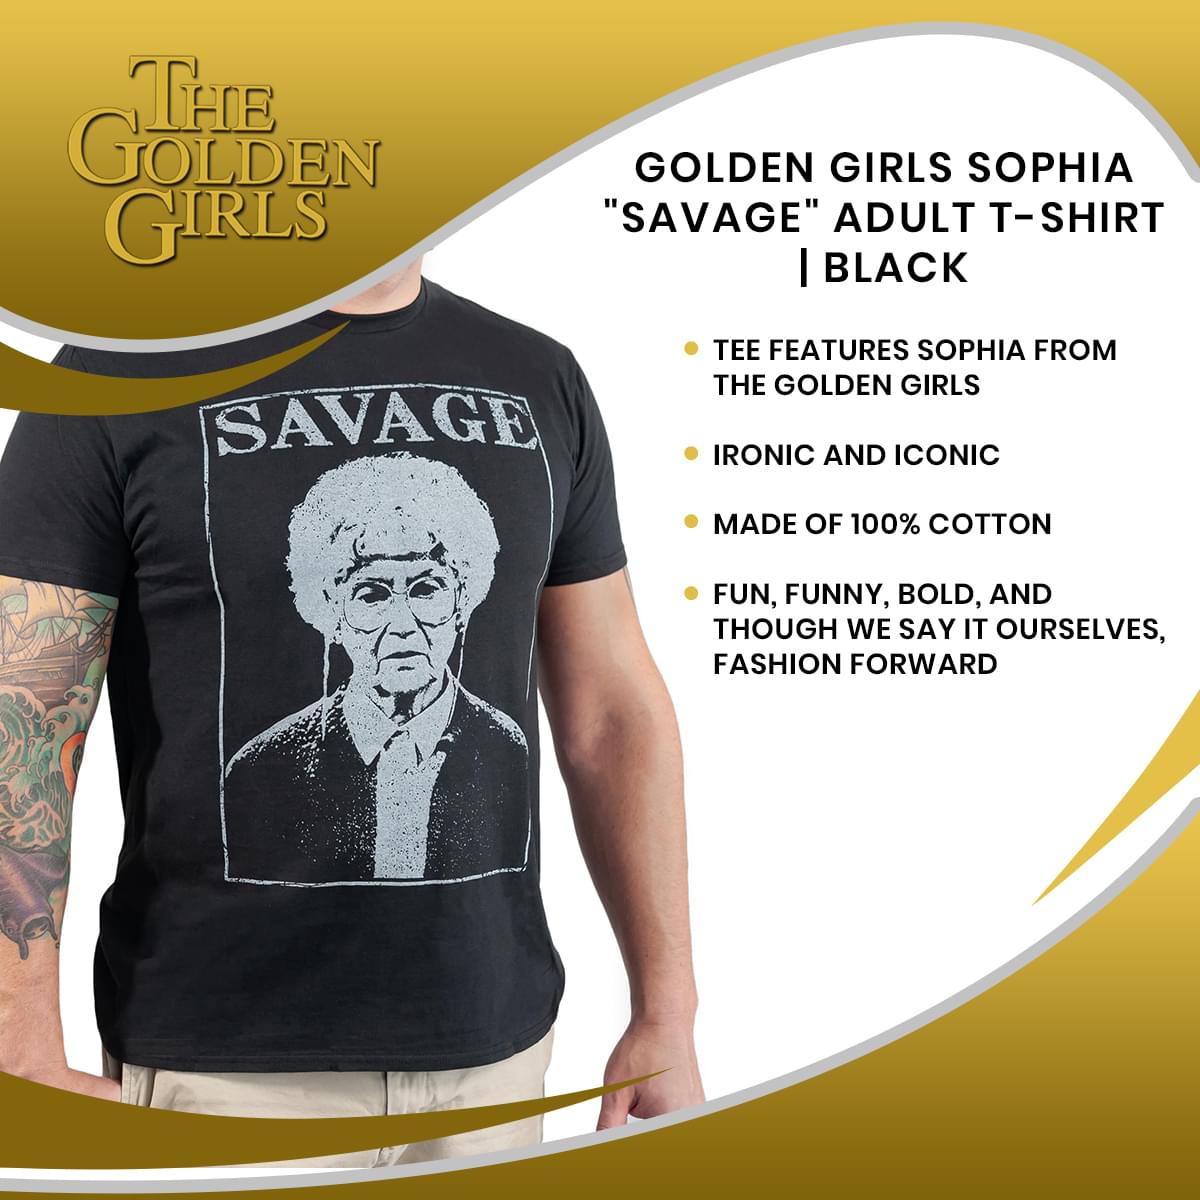 Golden Girls Sophia "Savage" Adult T-Shirt | Black